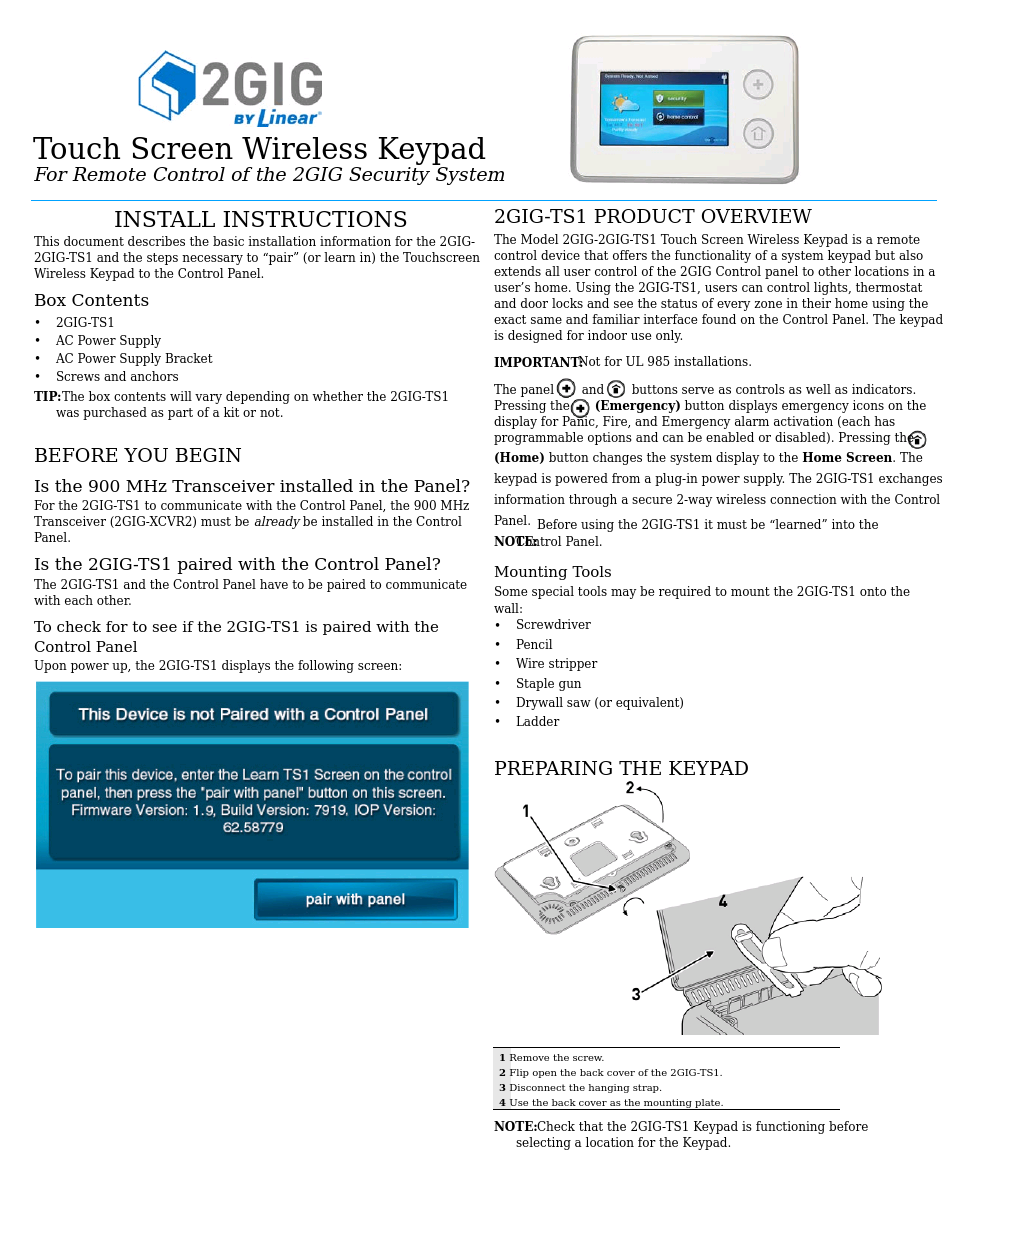 TS1 - Touch Screen Wireless Keypad